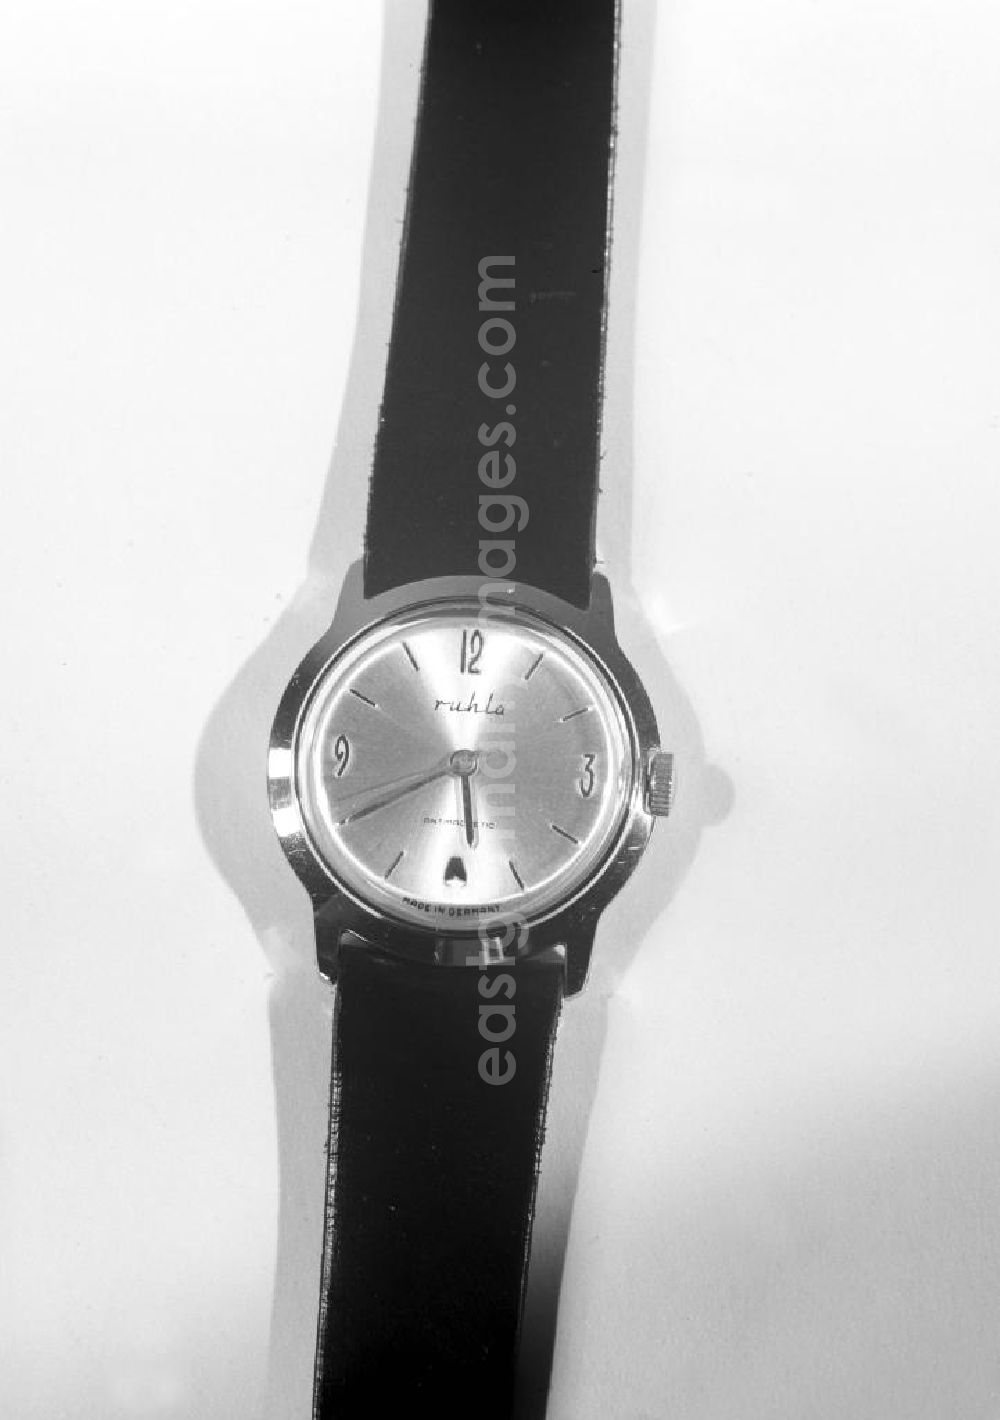 GDR picture archive: Ruhla - Blick auf eine Armbanduhr aus dem VEB Uhrenwerke Ruhla.